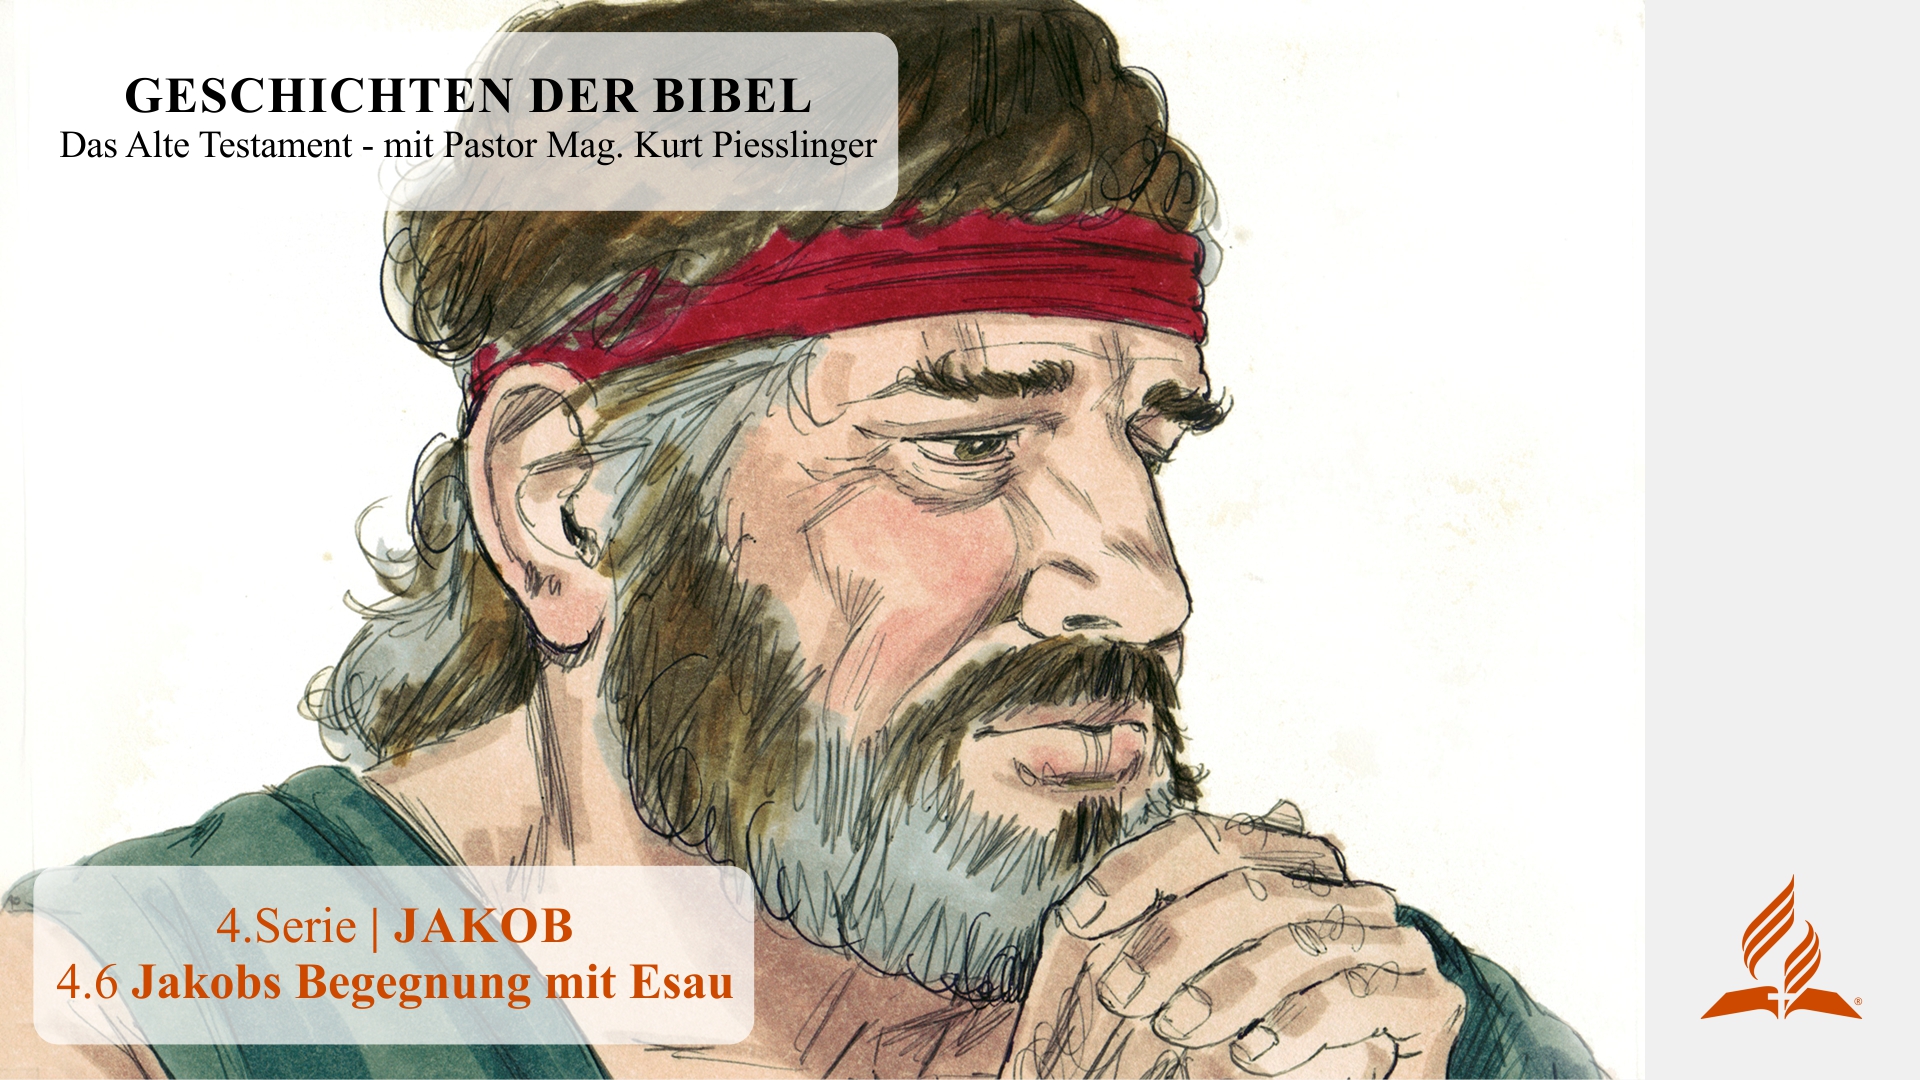 GESCHICHTEN DER BIBEL: 4.6 Jakobs Begegnung mit Esau – 4.JAKOB | Pastor Mag. Kurt Piesslinger